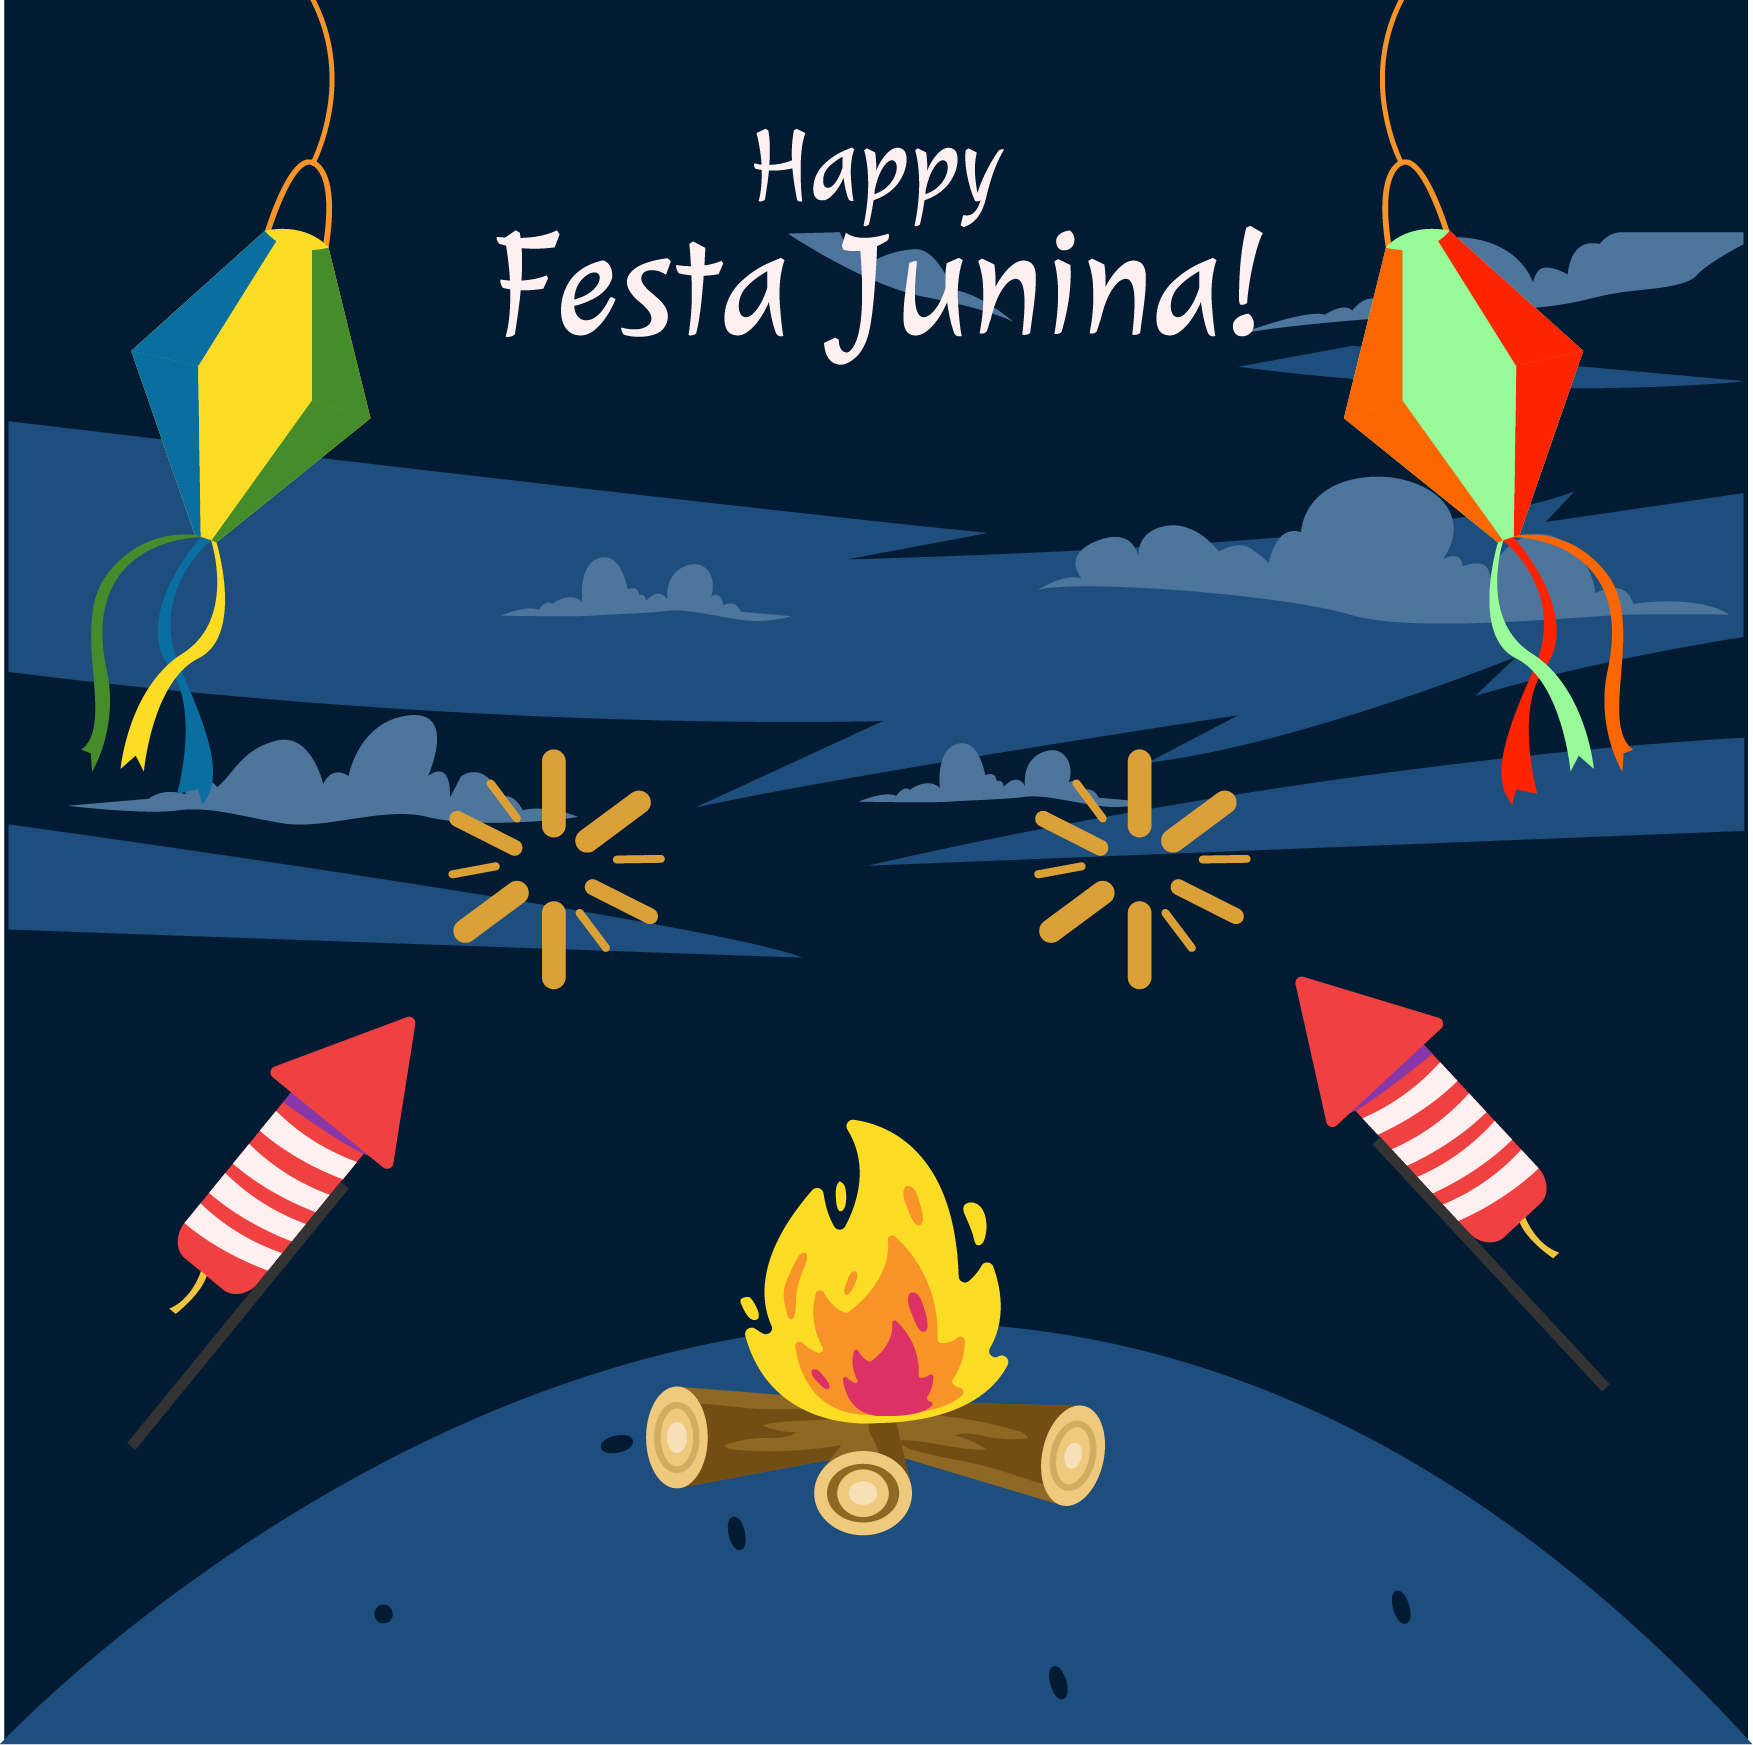 Free Festa Junina Celebration Vector in Illustrator, PSD, EPS, SVG, JPG, PNG